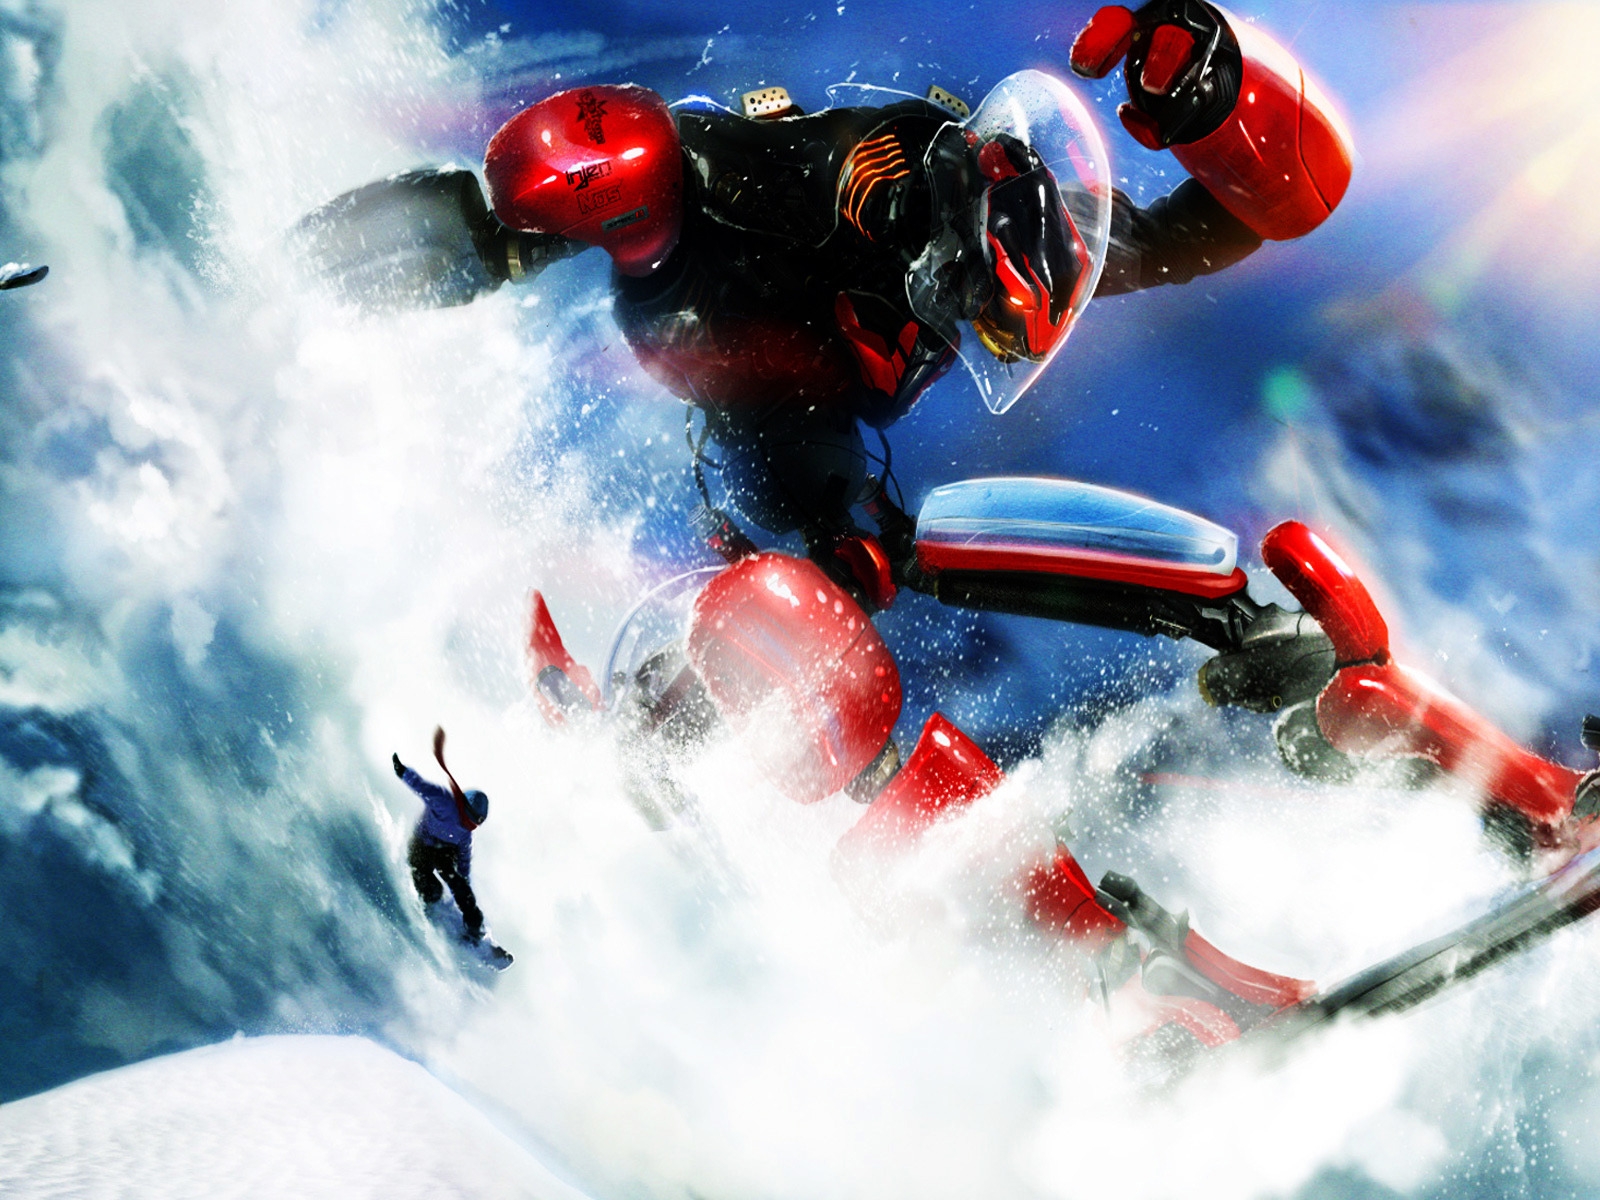 Fantasy Snowboarding for 1600 x 1200 resolution